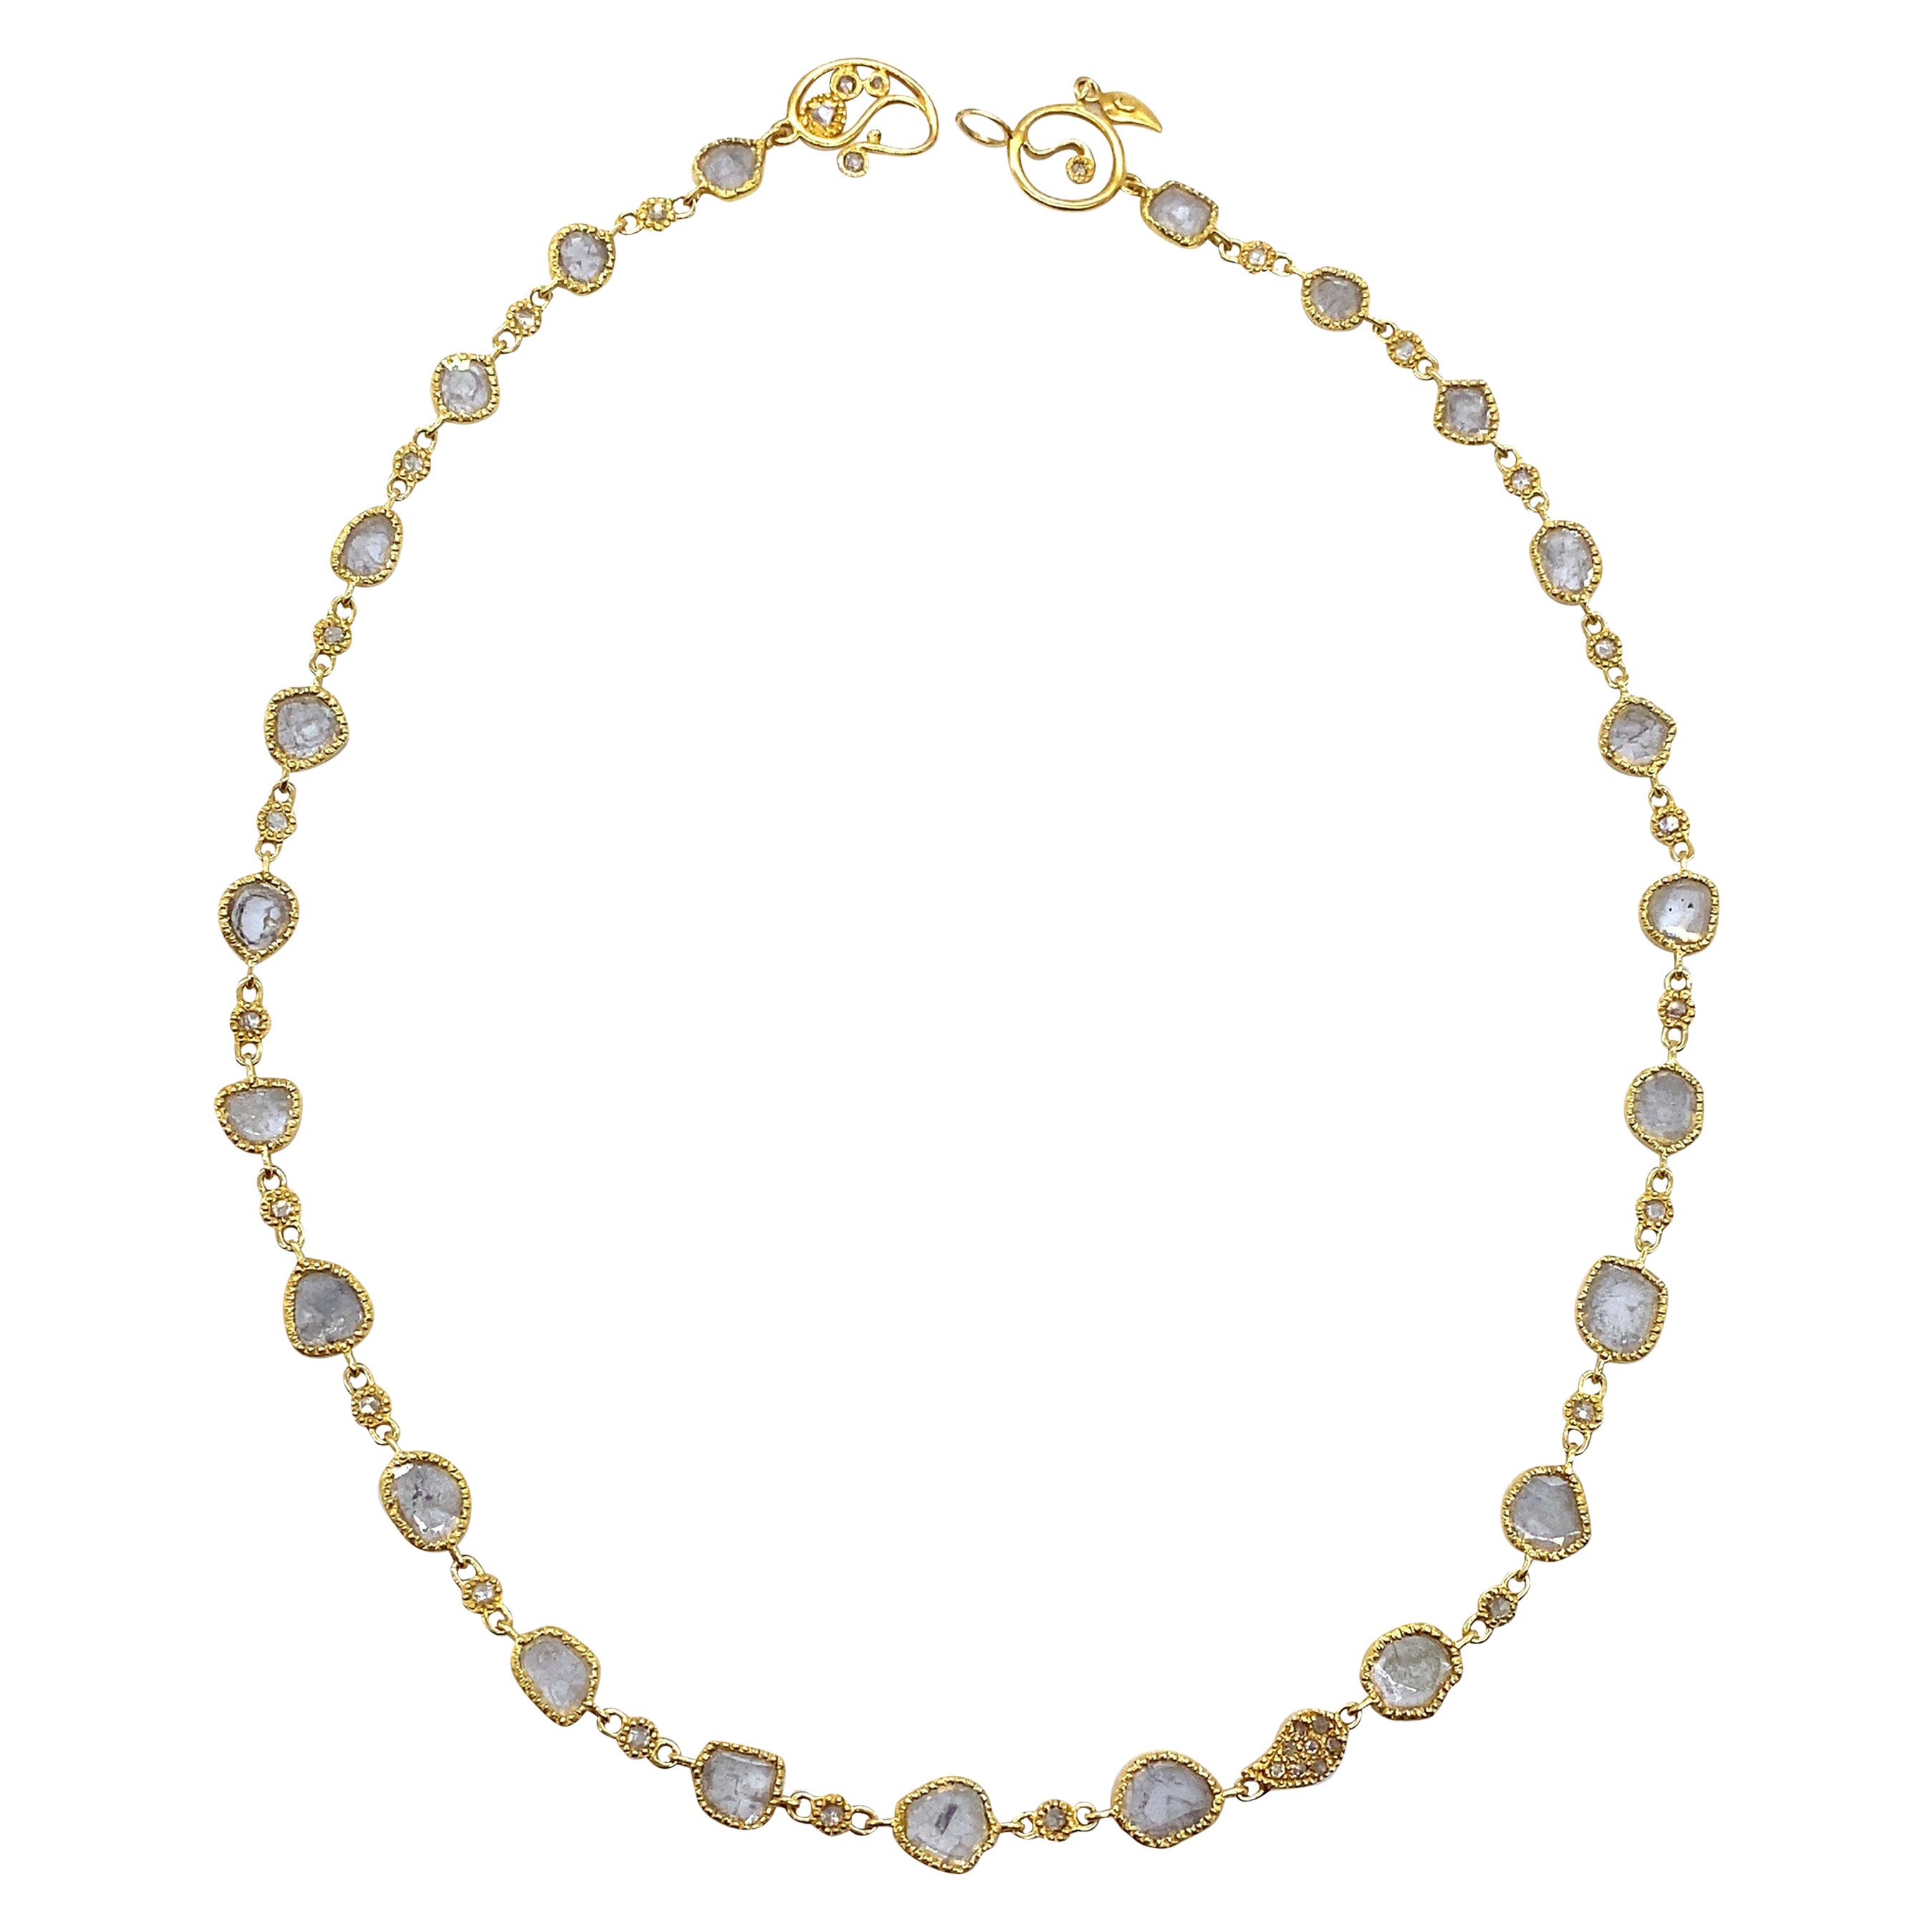 Stunning 6.32 Carat Rose-Cut White Diamond Necklace